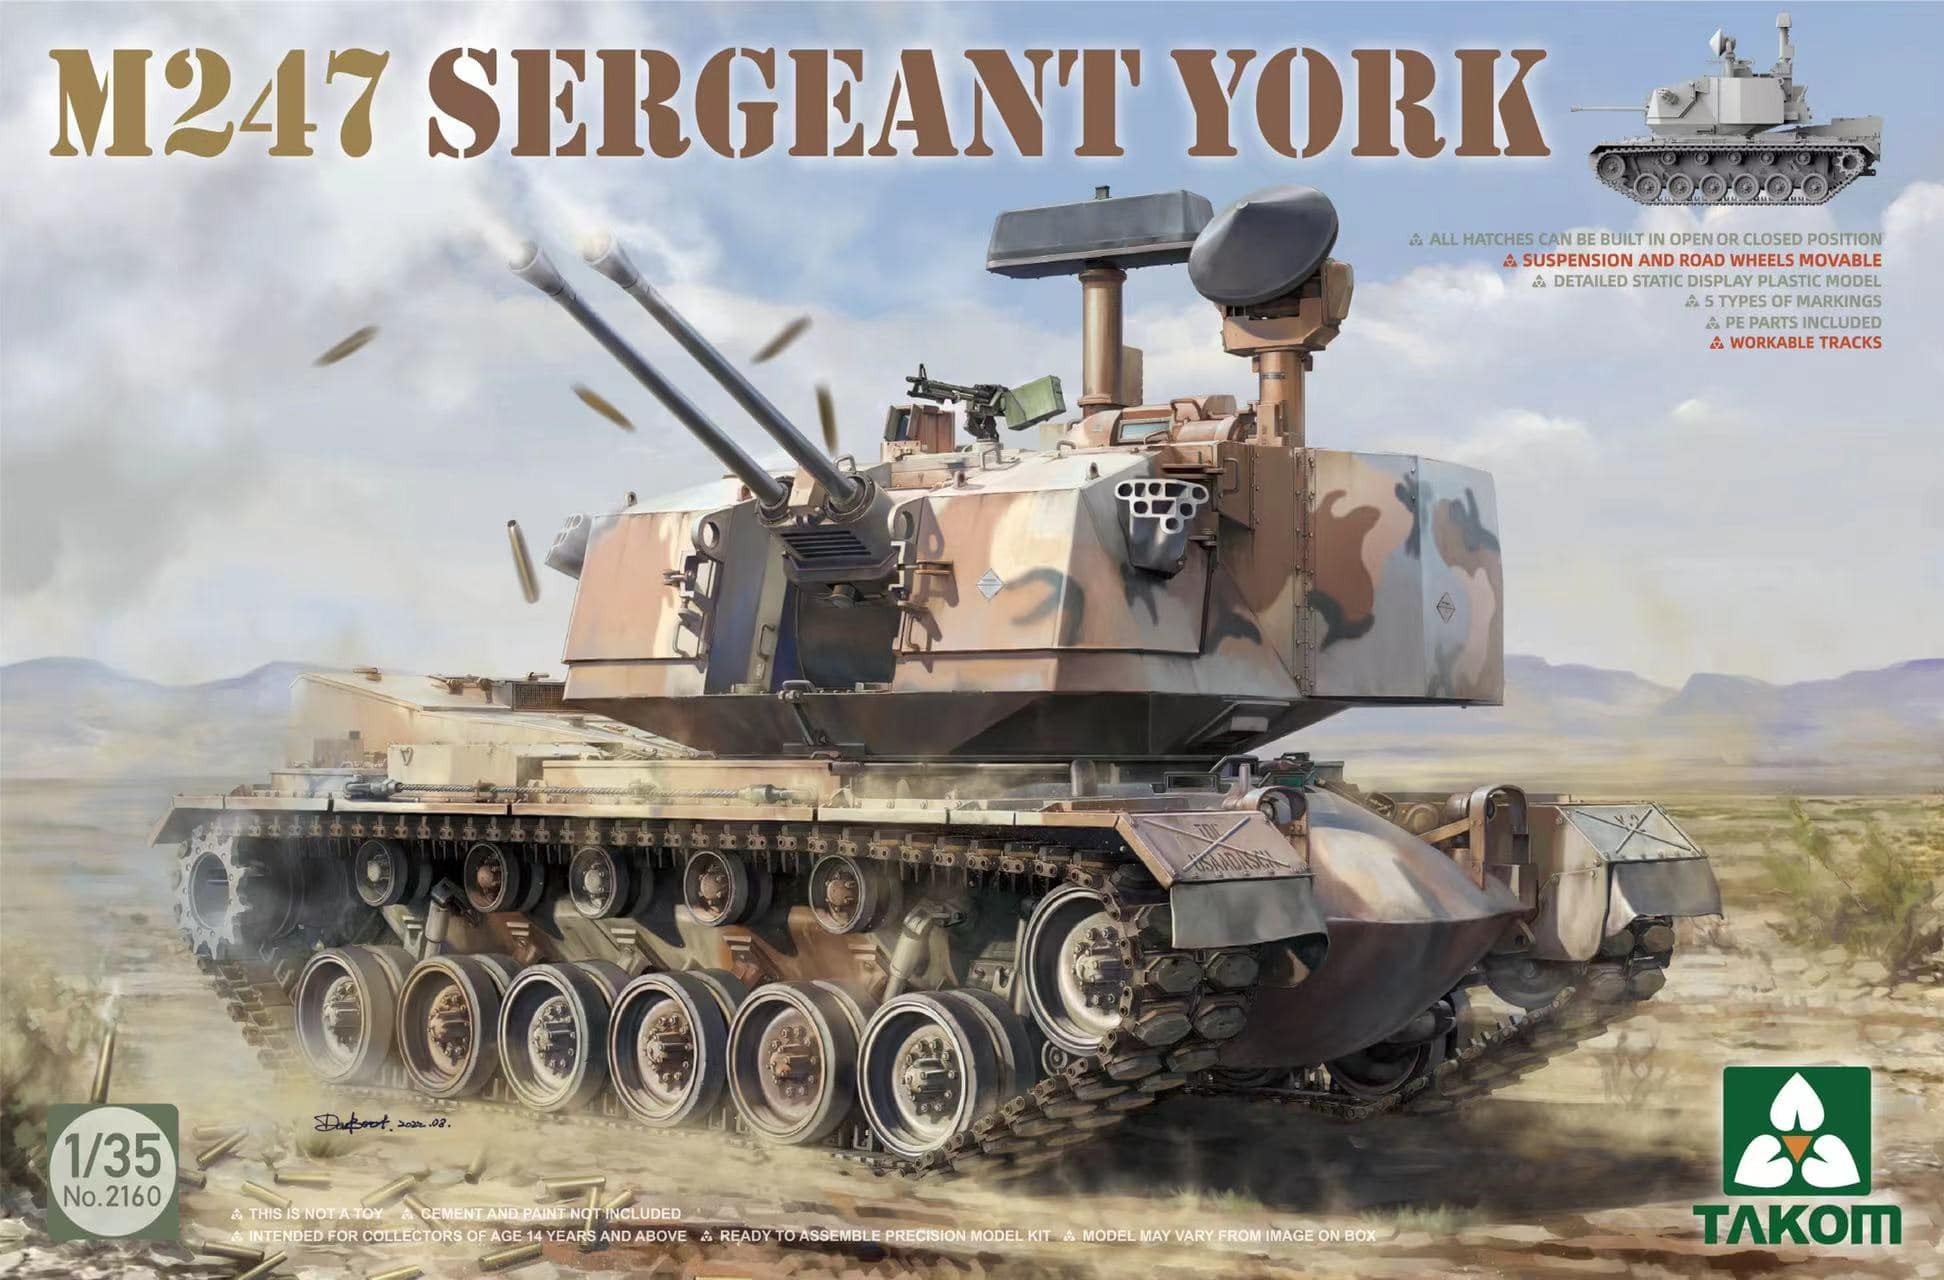 2160 - M247 Sergeant York